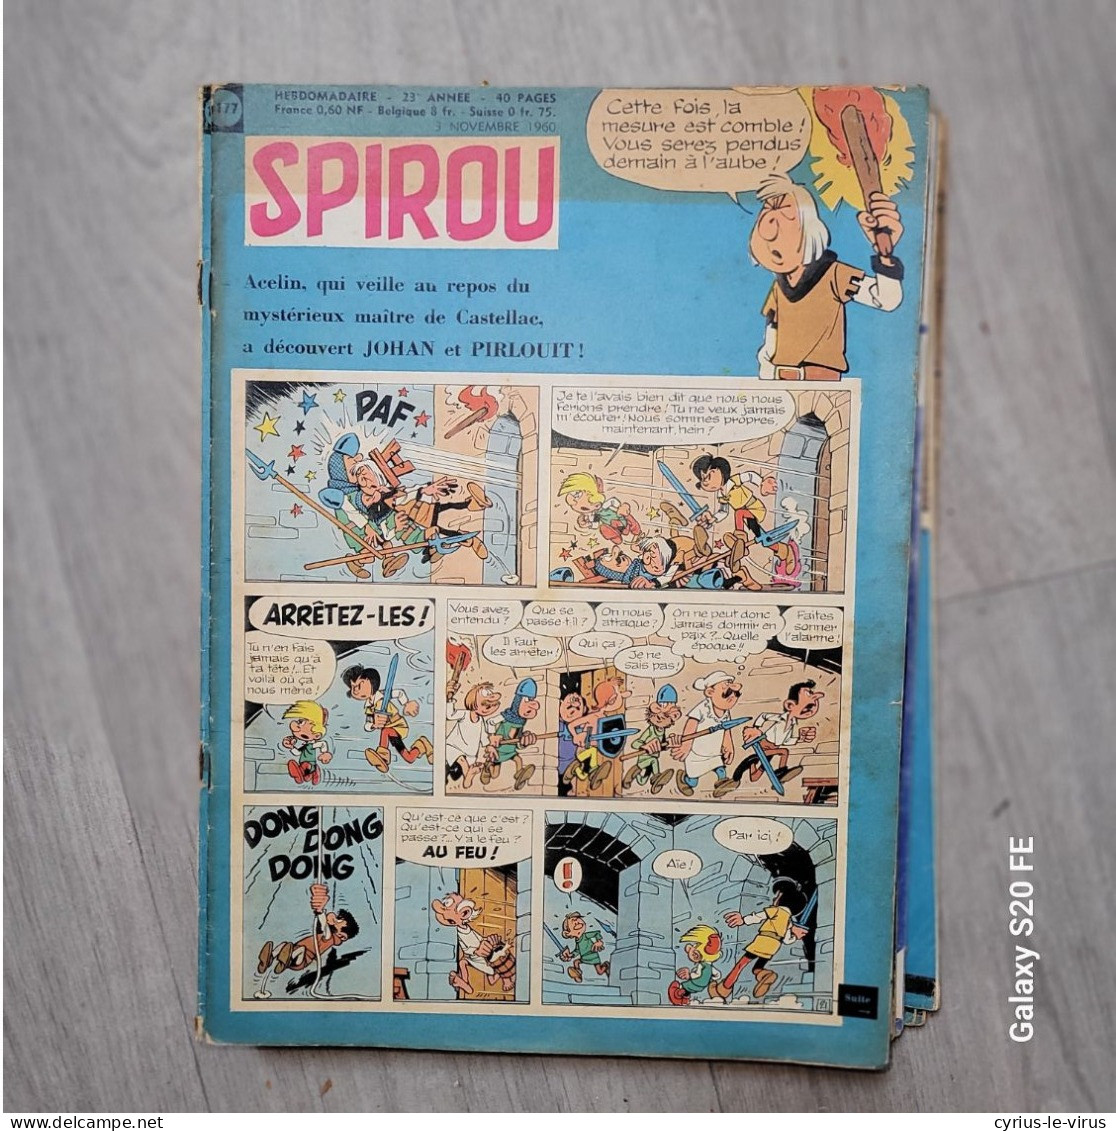 Magazines Spirou  ** L'ombre Du Z - Spirou Magazine